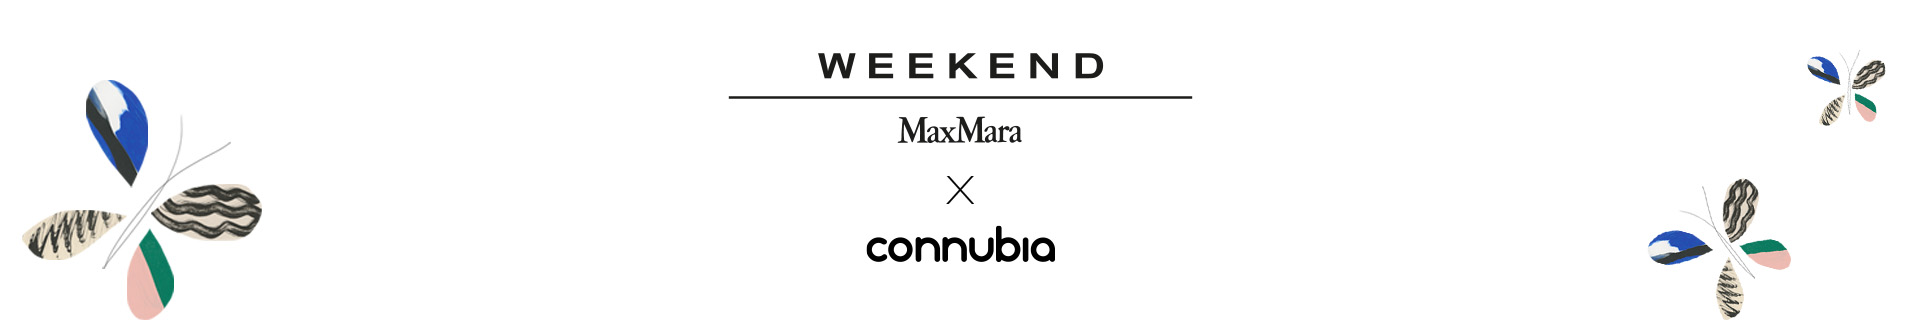 Connubia x Weekend Max Mara Logo